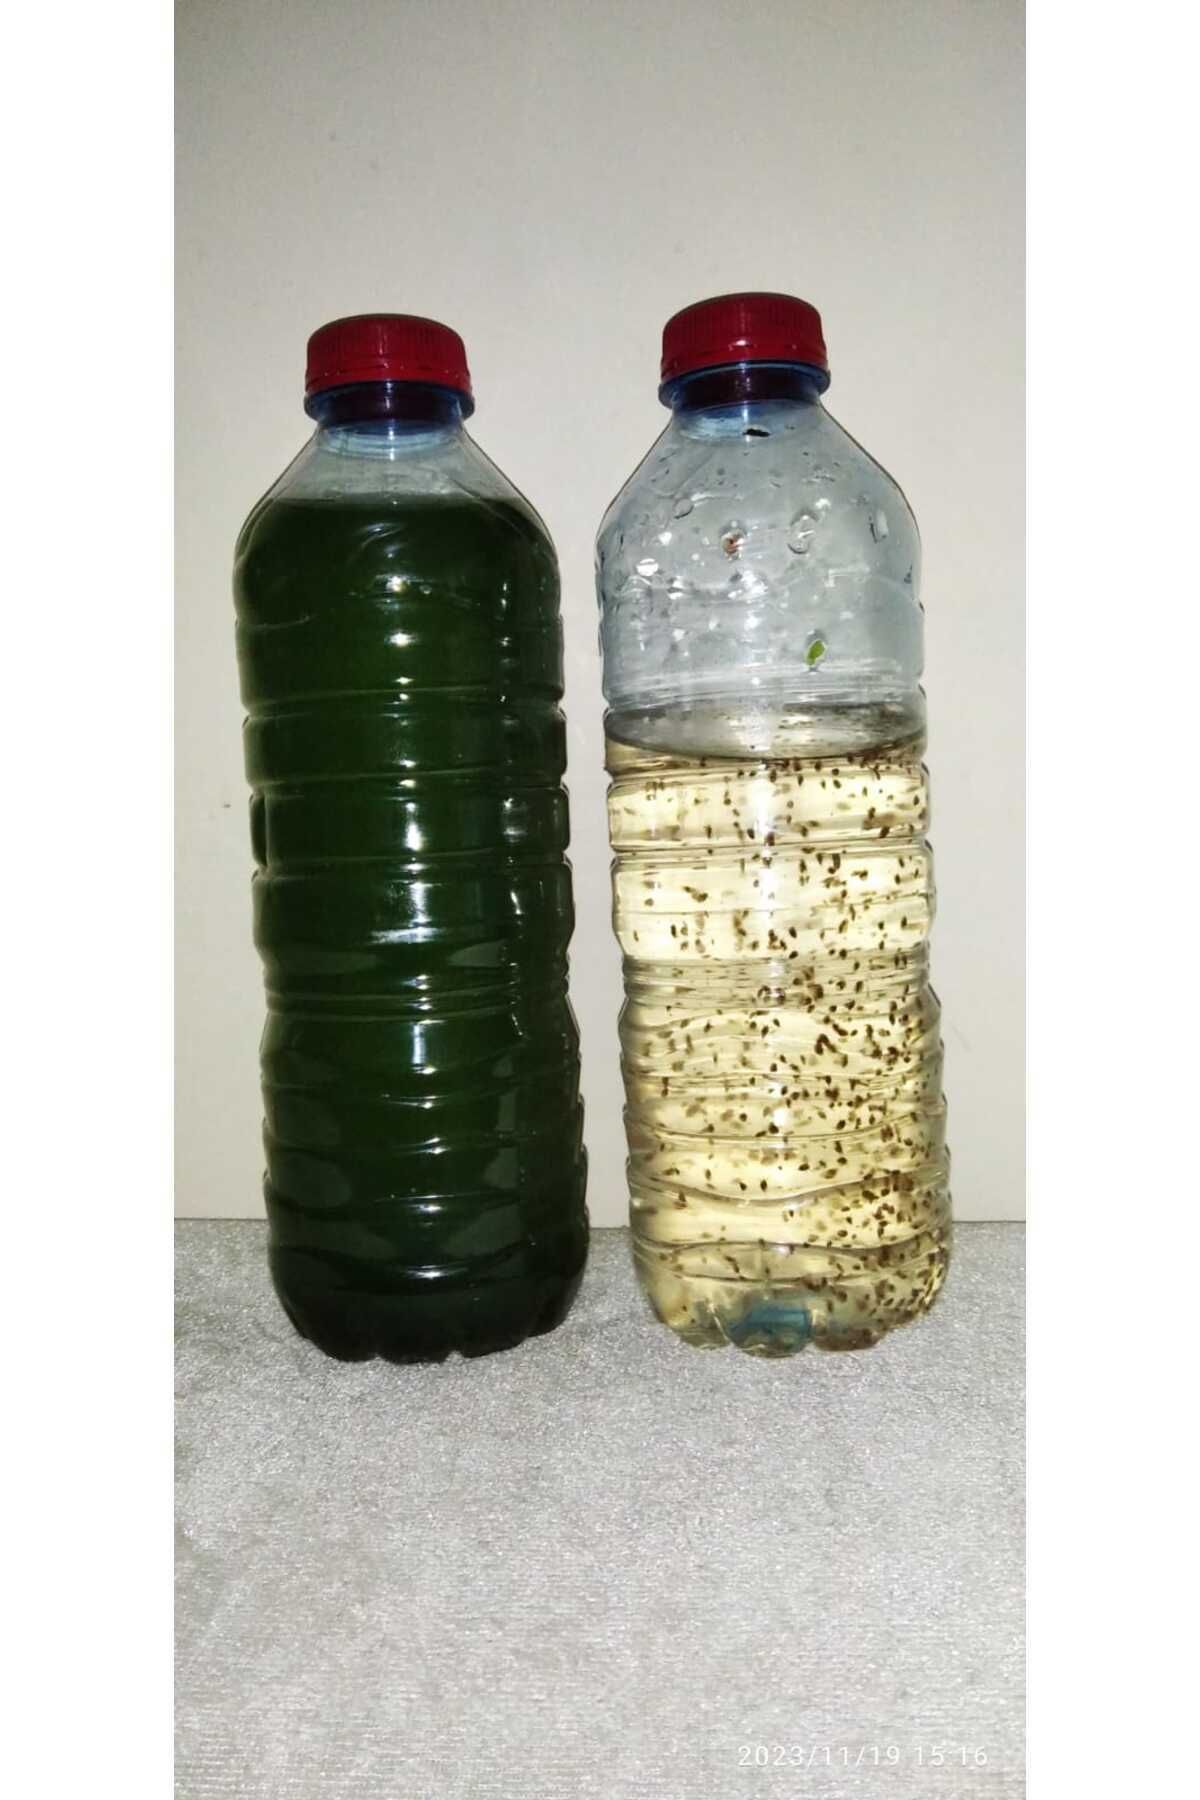 Petshop KOÇLAR Su piresi Balık yemi protein kaynagı. 0,5lt su piresi + 0,5lt yeşil su alg.